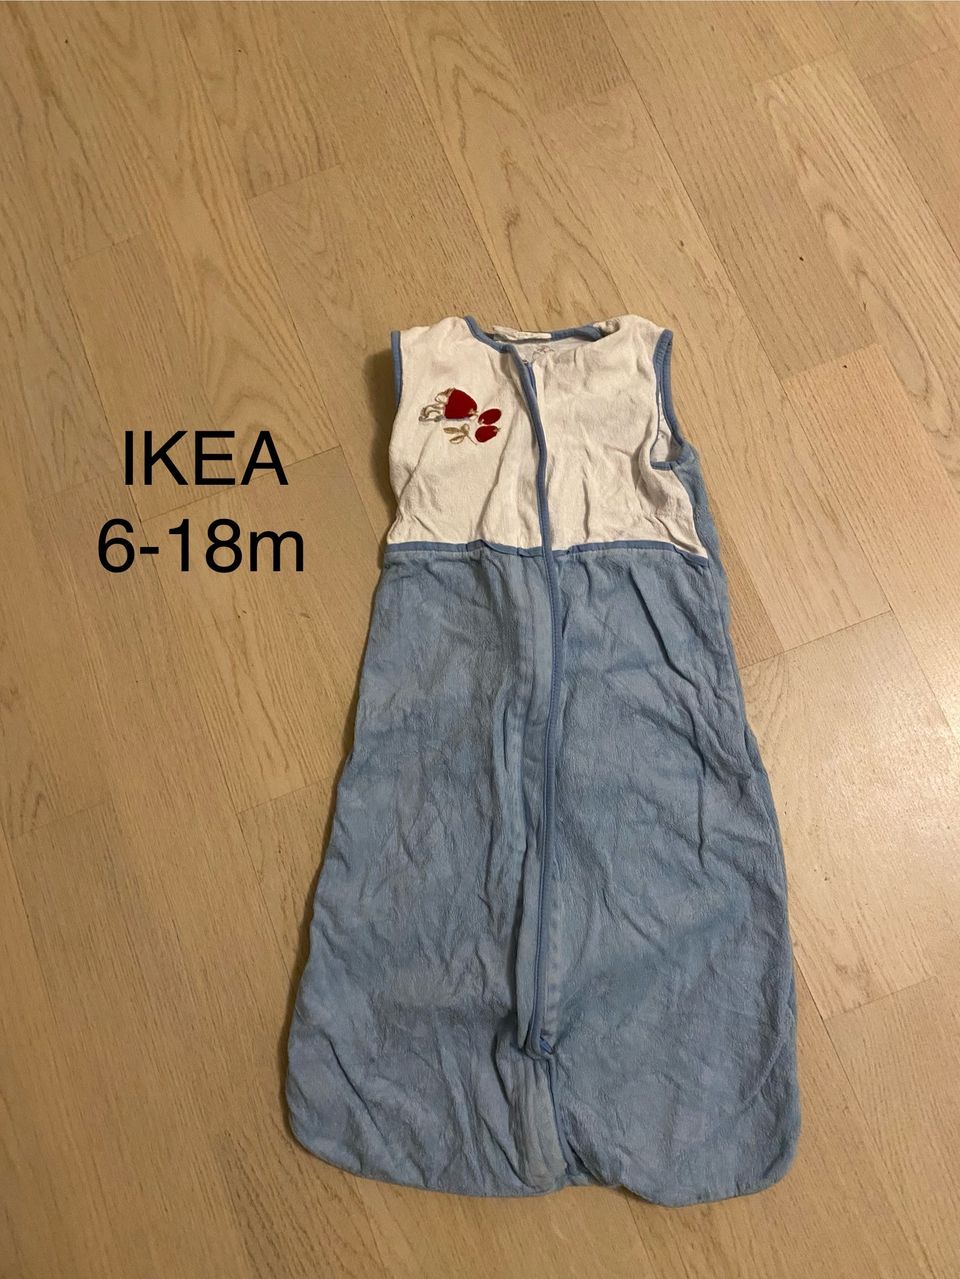 Ikea makupussi 6-18 m